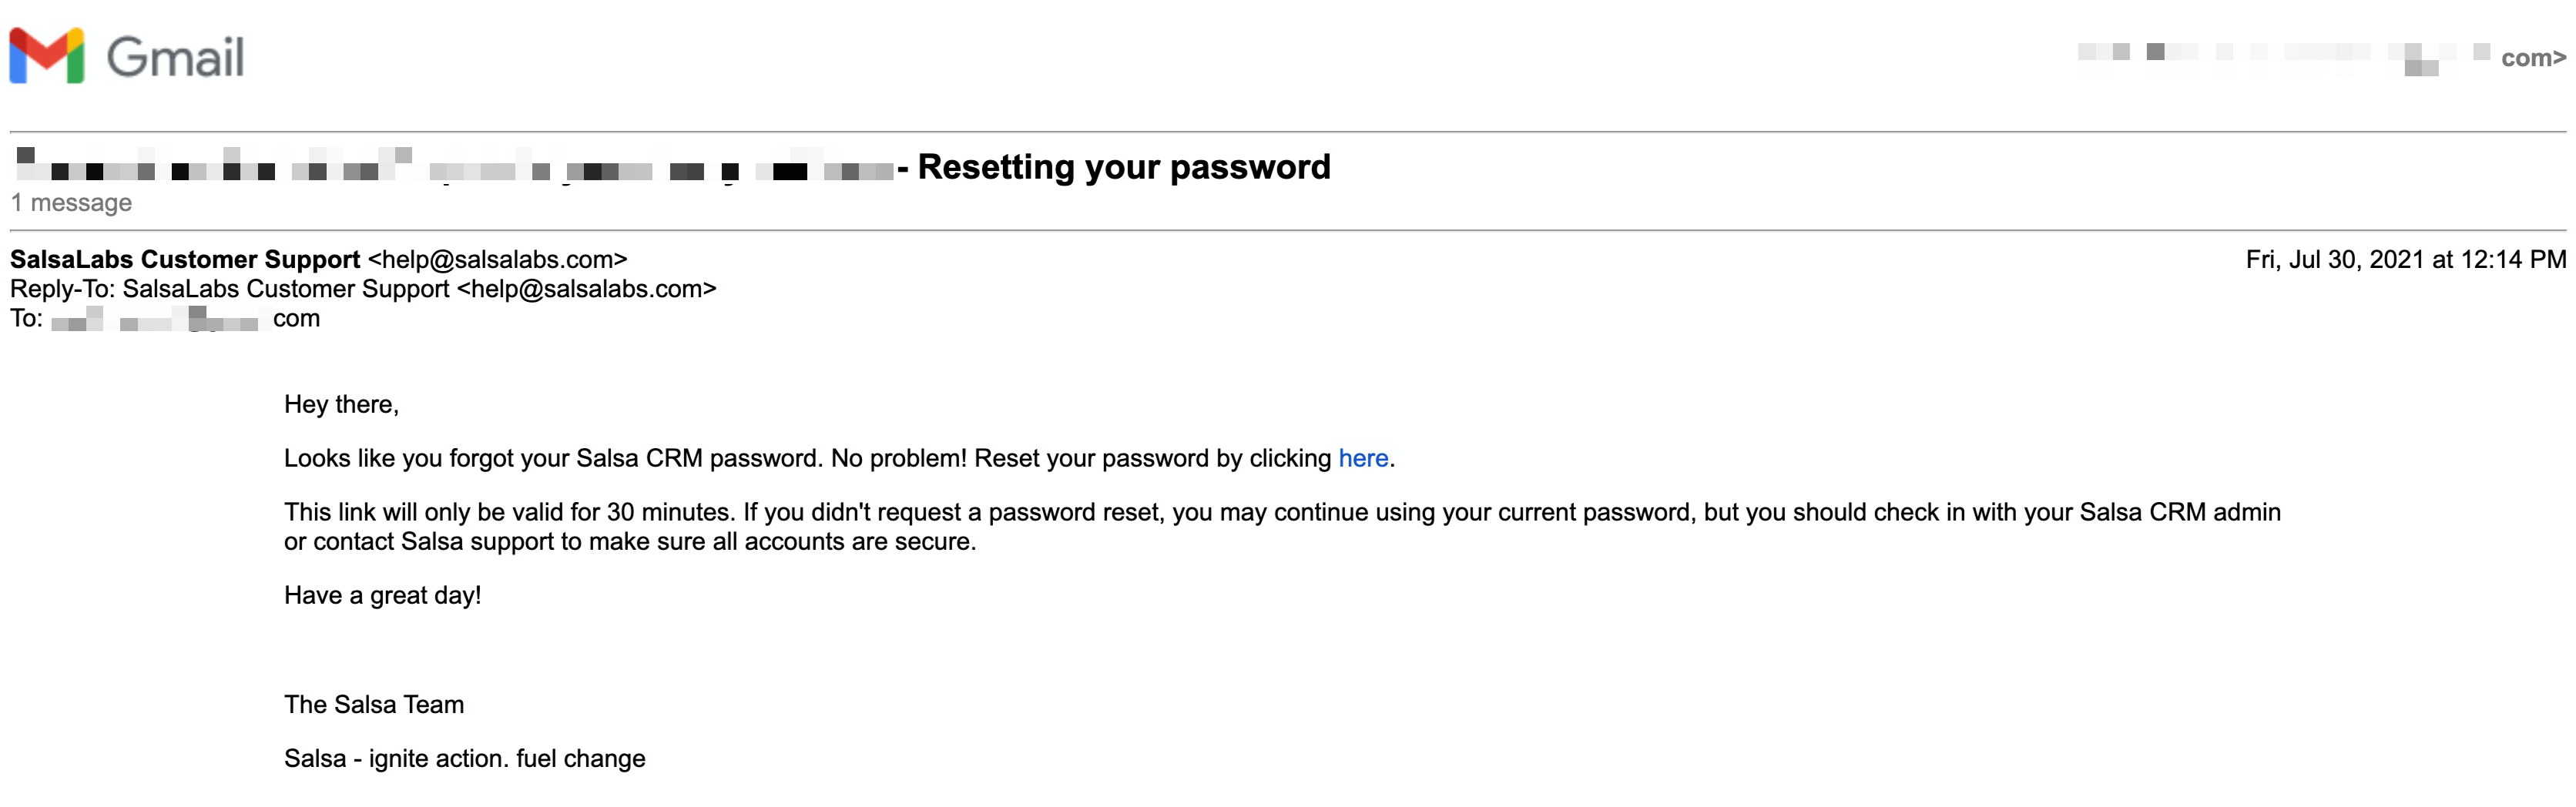 CRM_Reset_Password_Email.jpg